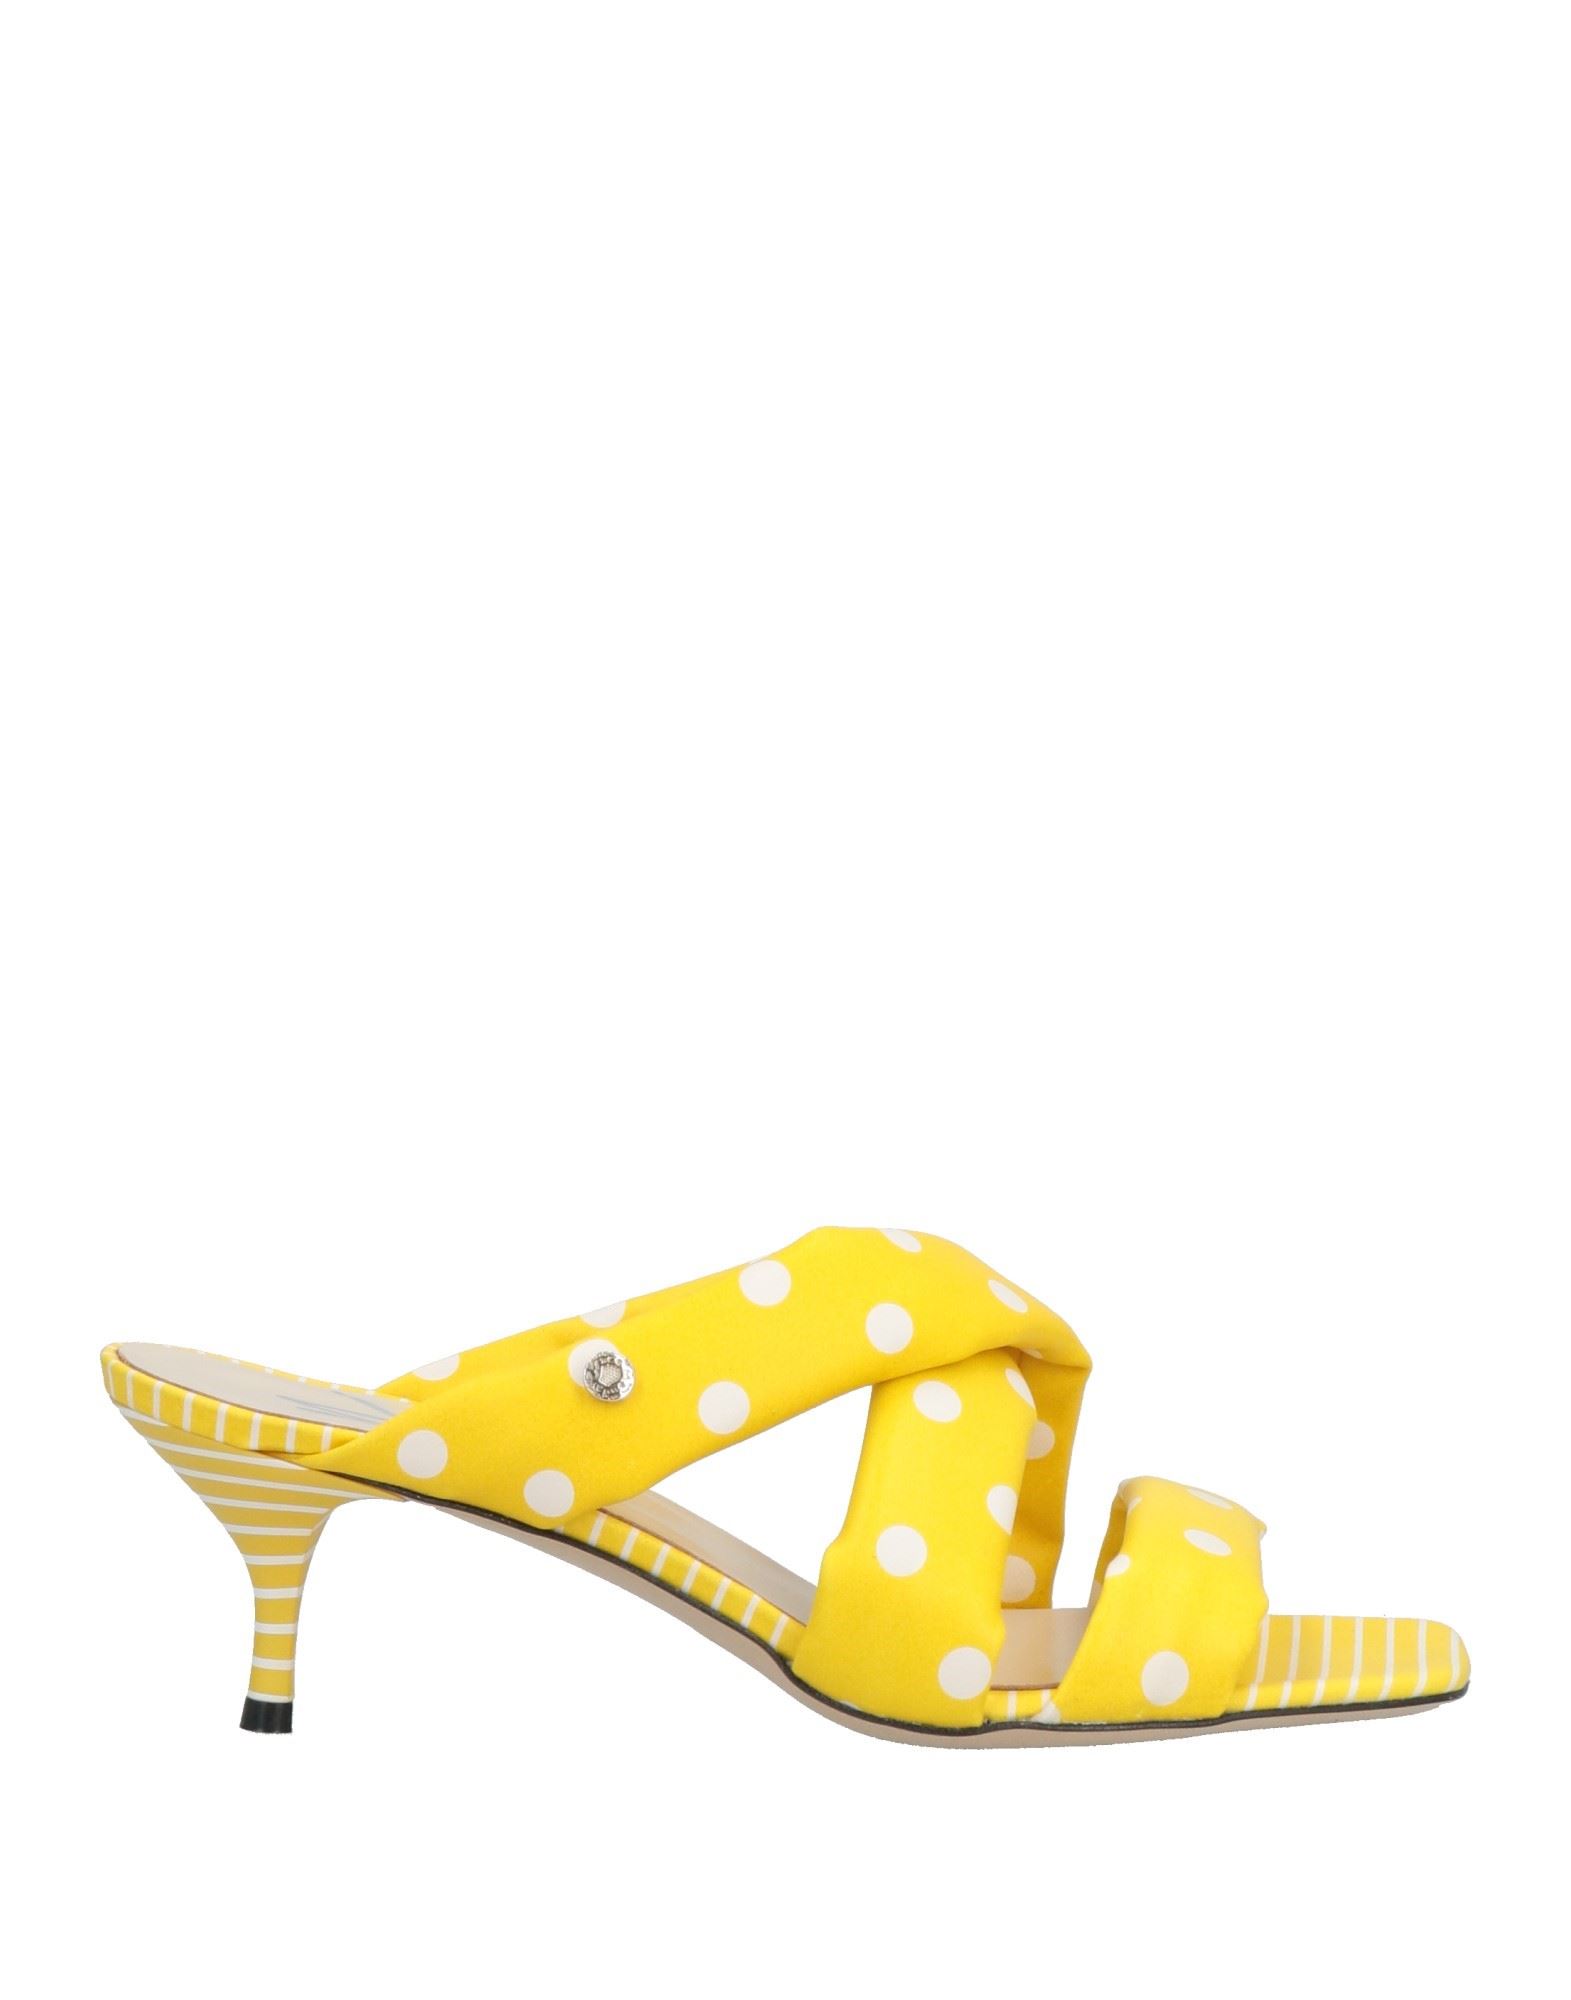 Manila Grace Sandals In Yellow